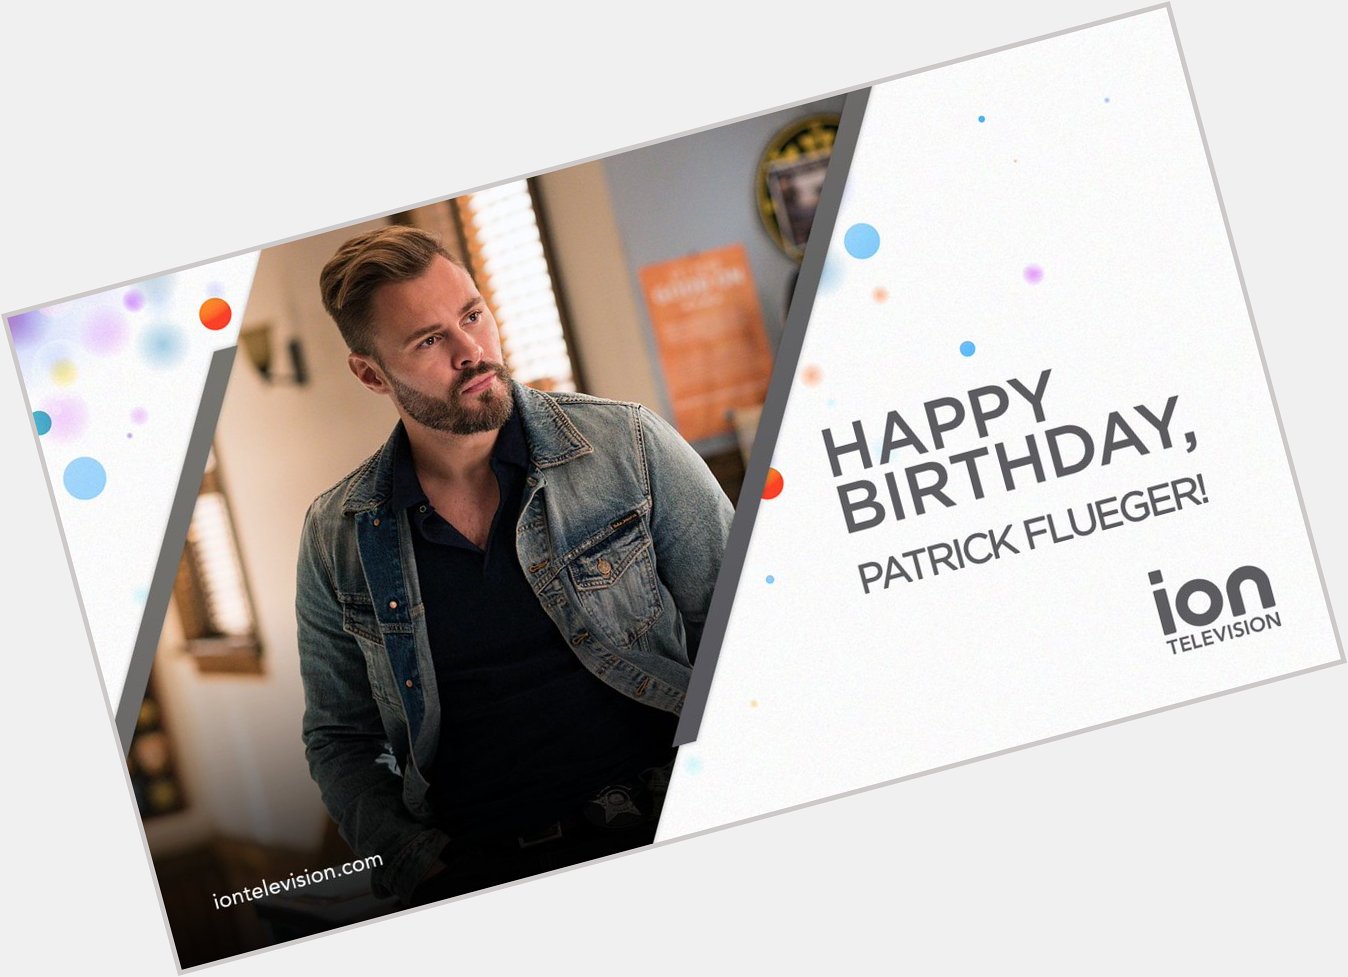 No one does like Patrick Flueger! LIKE to wish him a happy birthday 